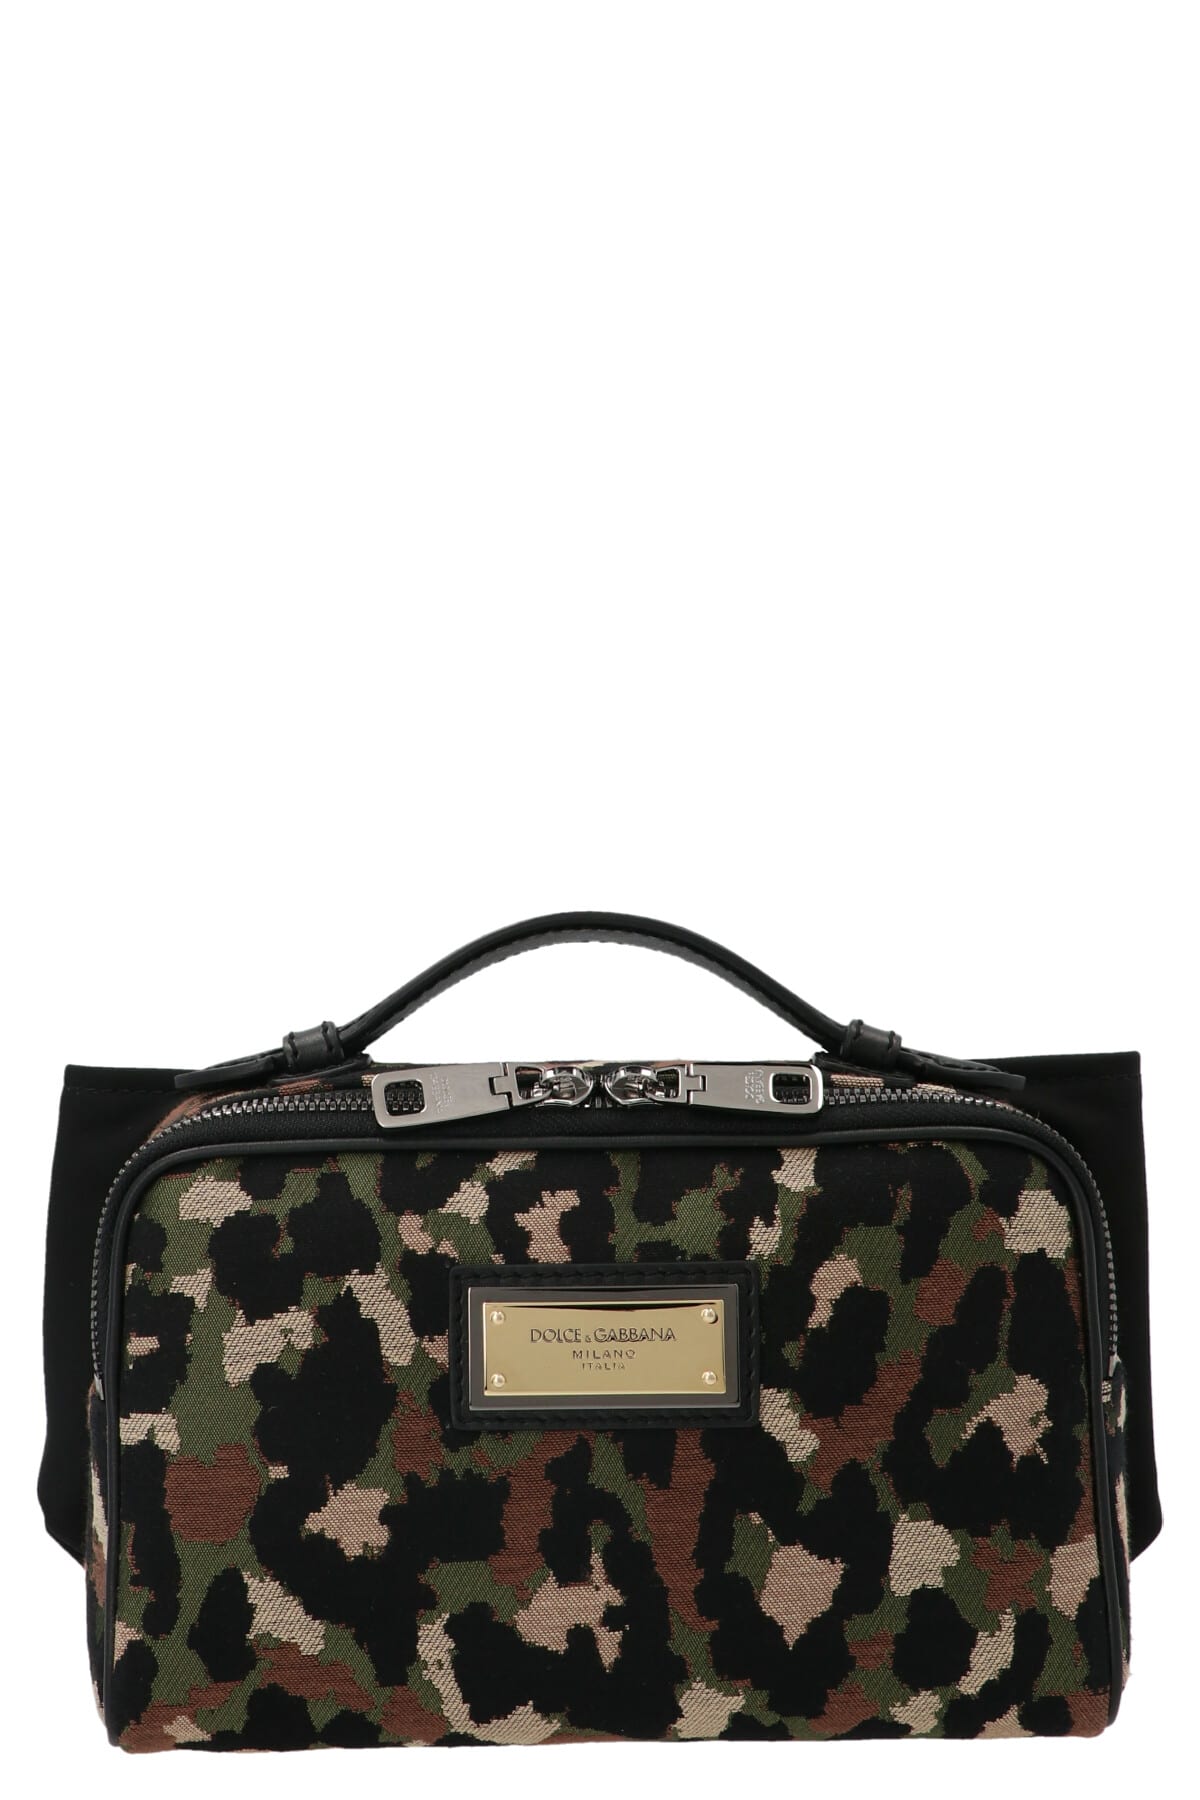 Dolce & Gabbana Animal Print Jacquard Belt Bag